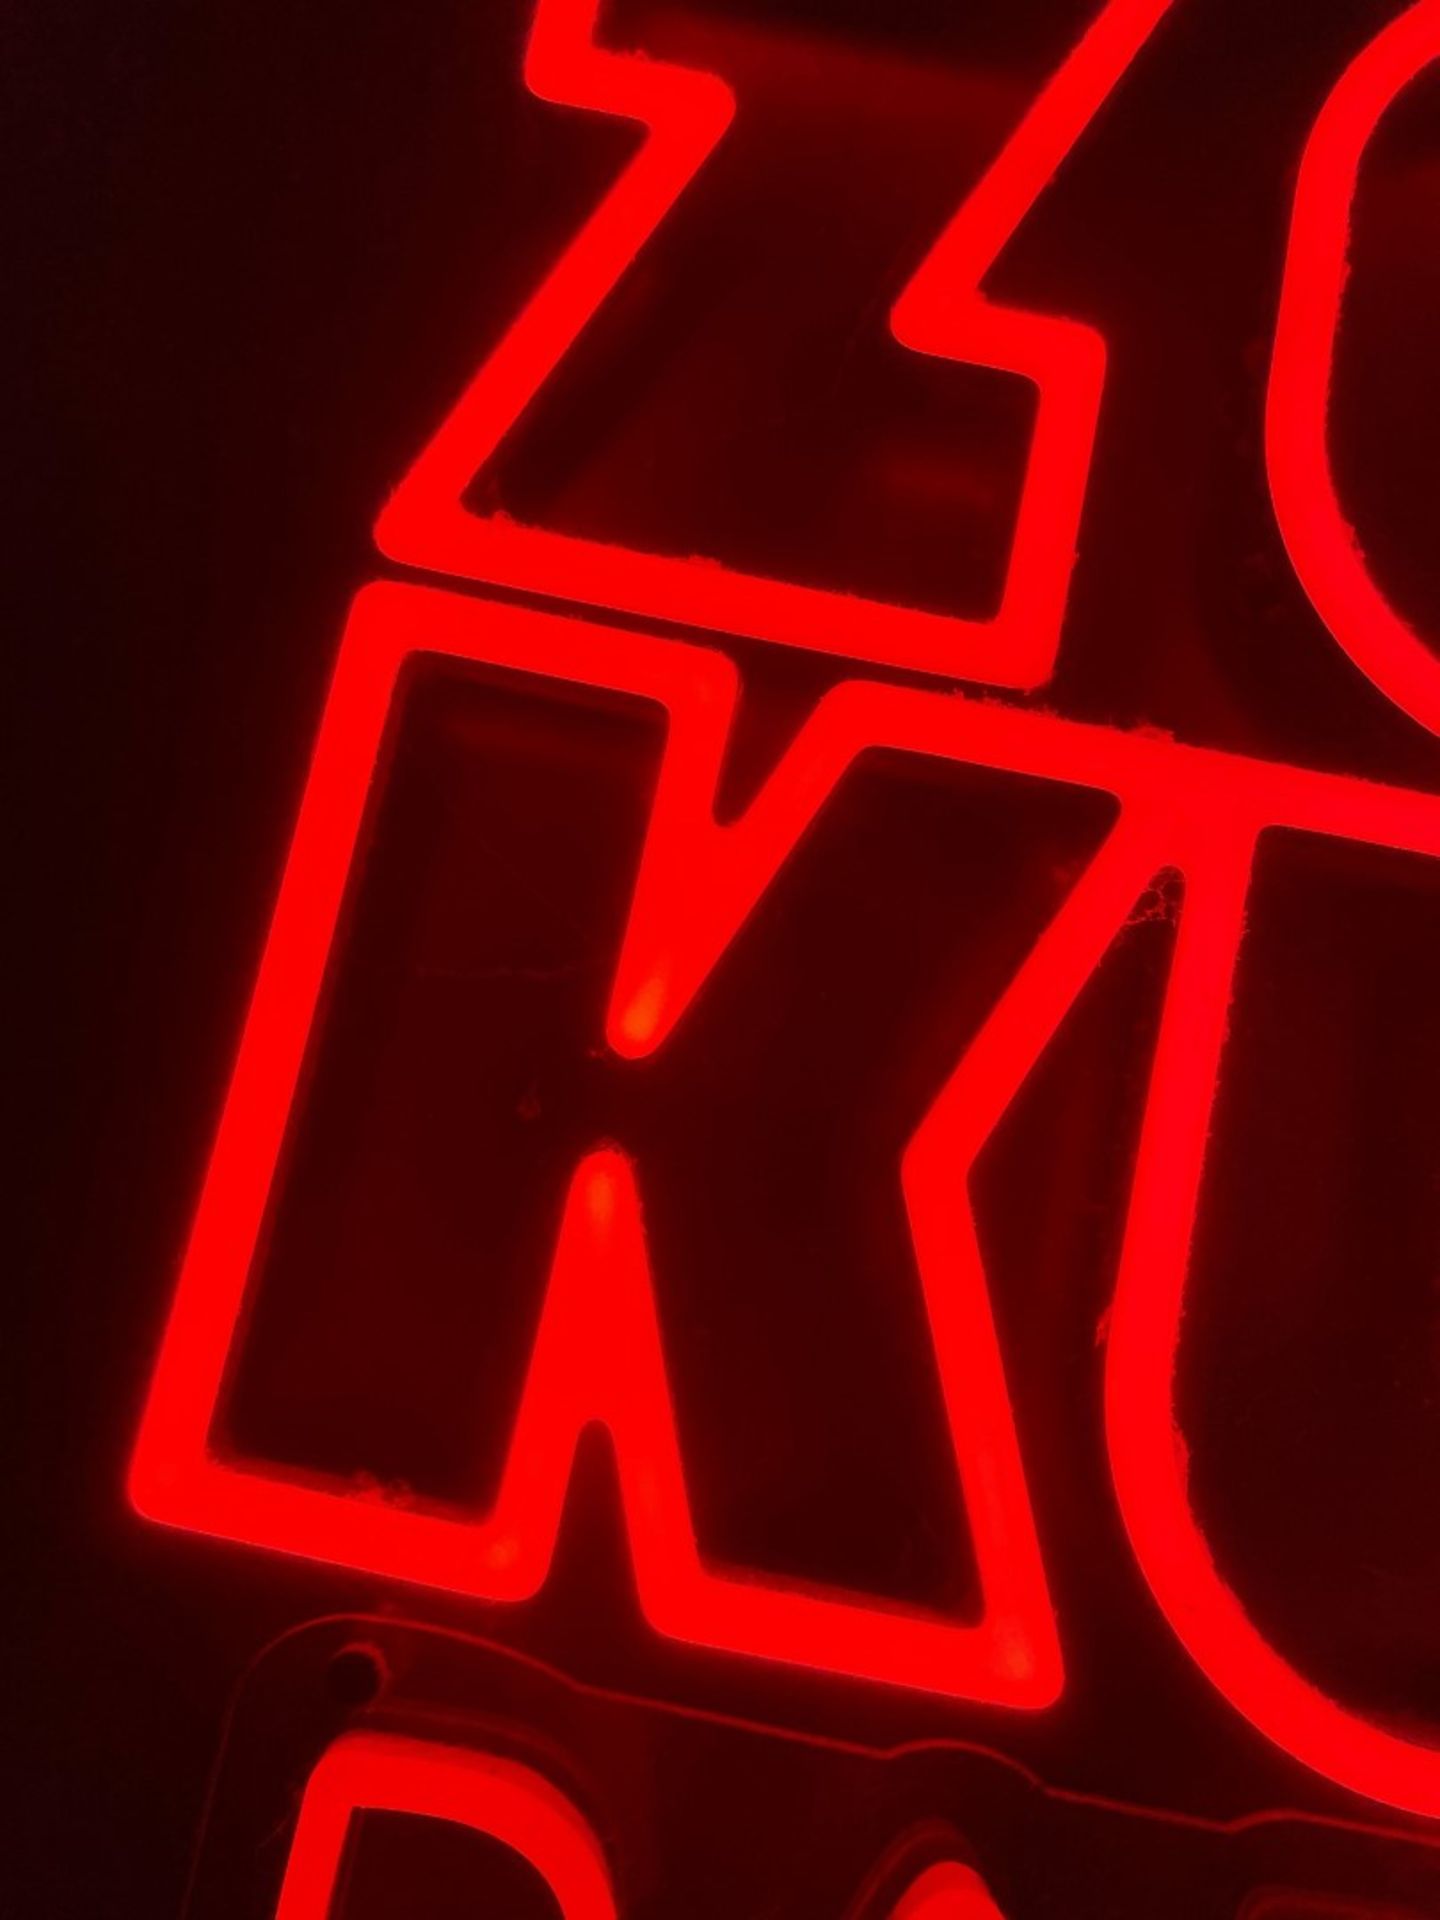 1 x RED NEON Wall Sign ZOKU BAR - ZO KU BAR - Dimensions: 65 x 40 cms - Image 4 of 5